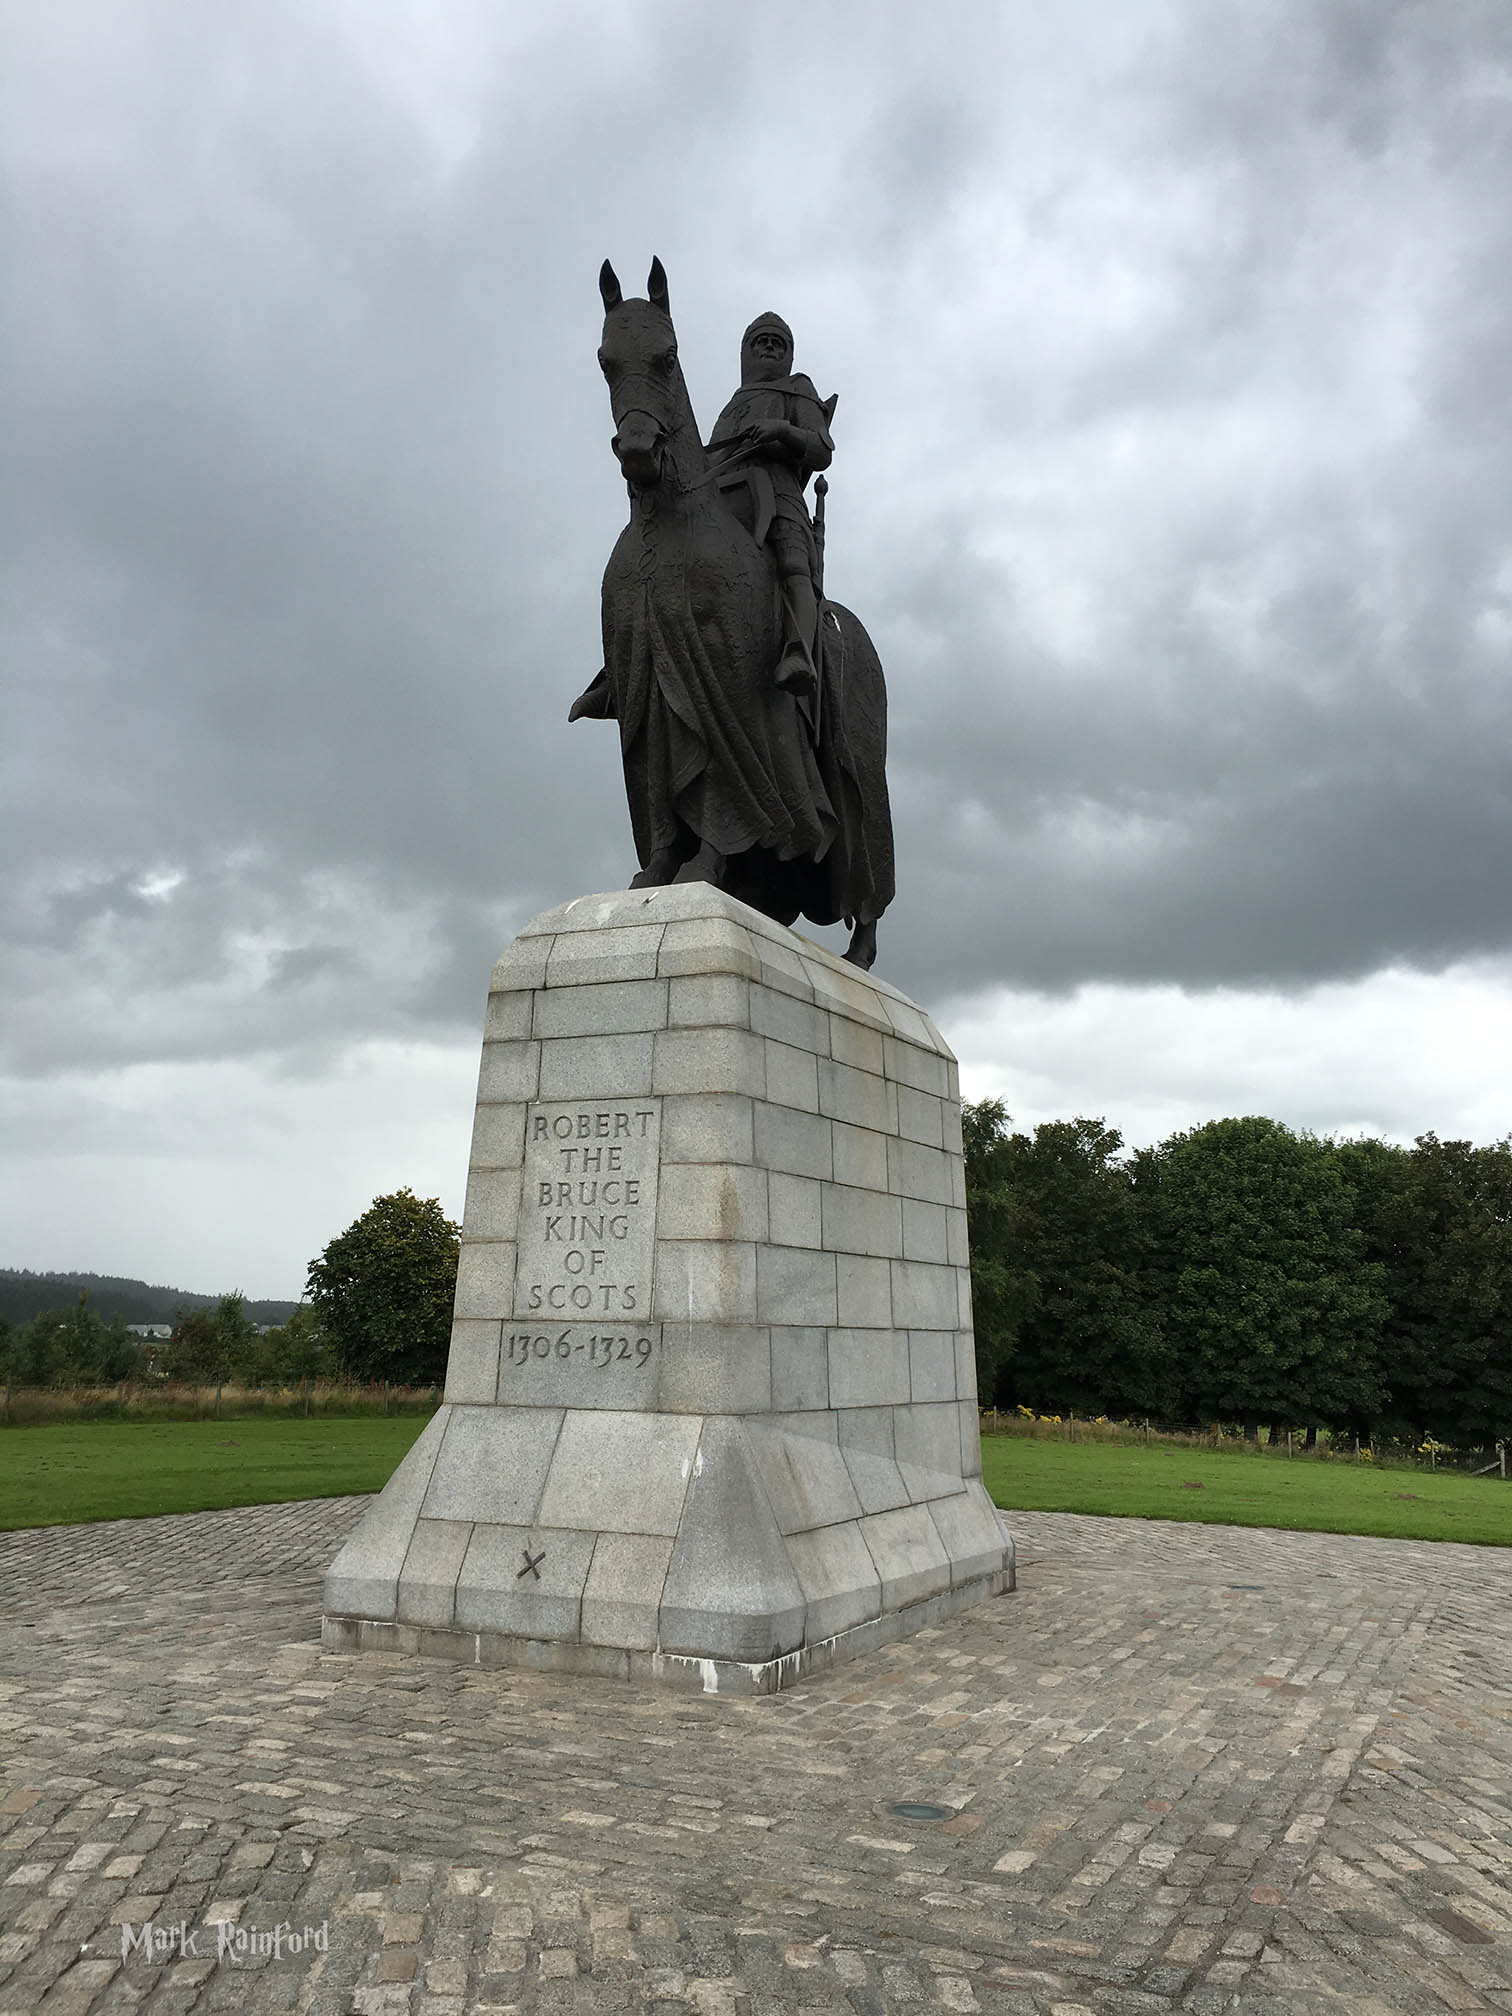 Battle of Bannockburn - King Robert The Bruce